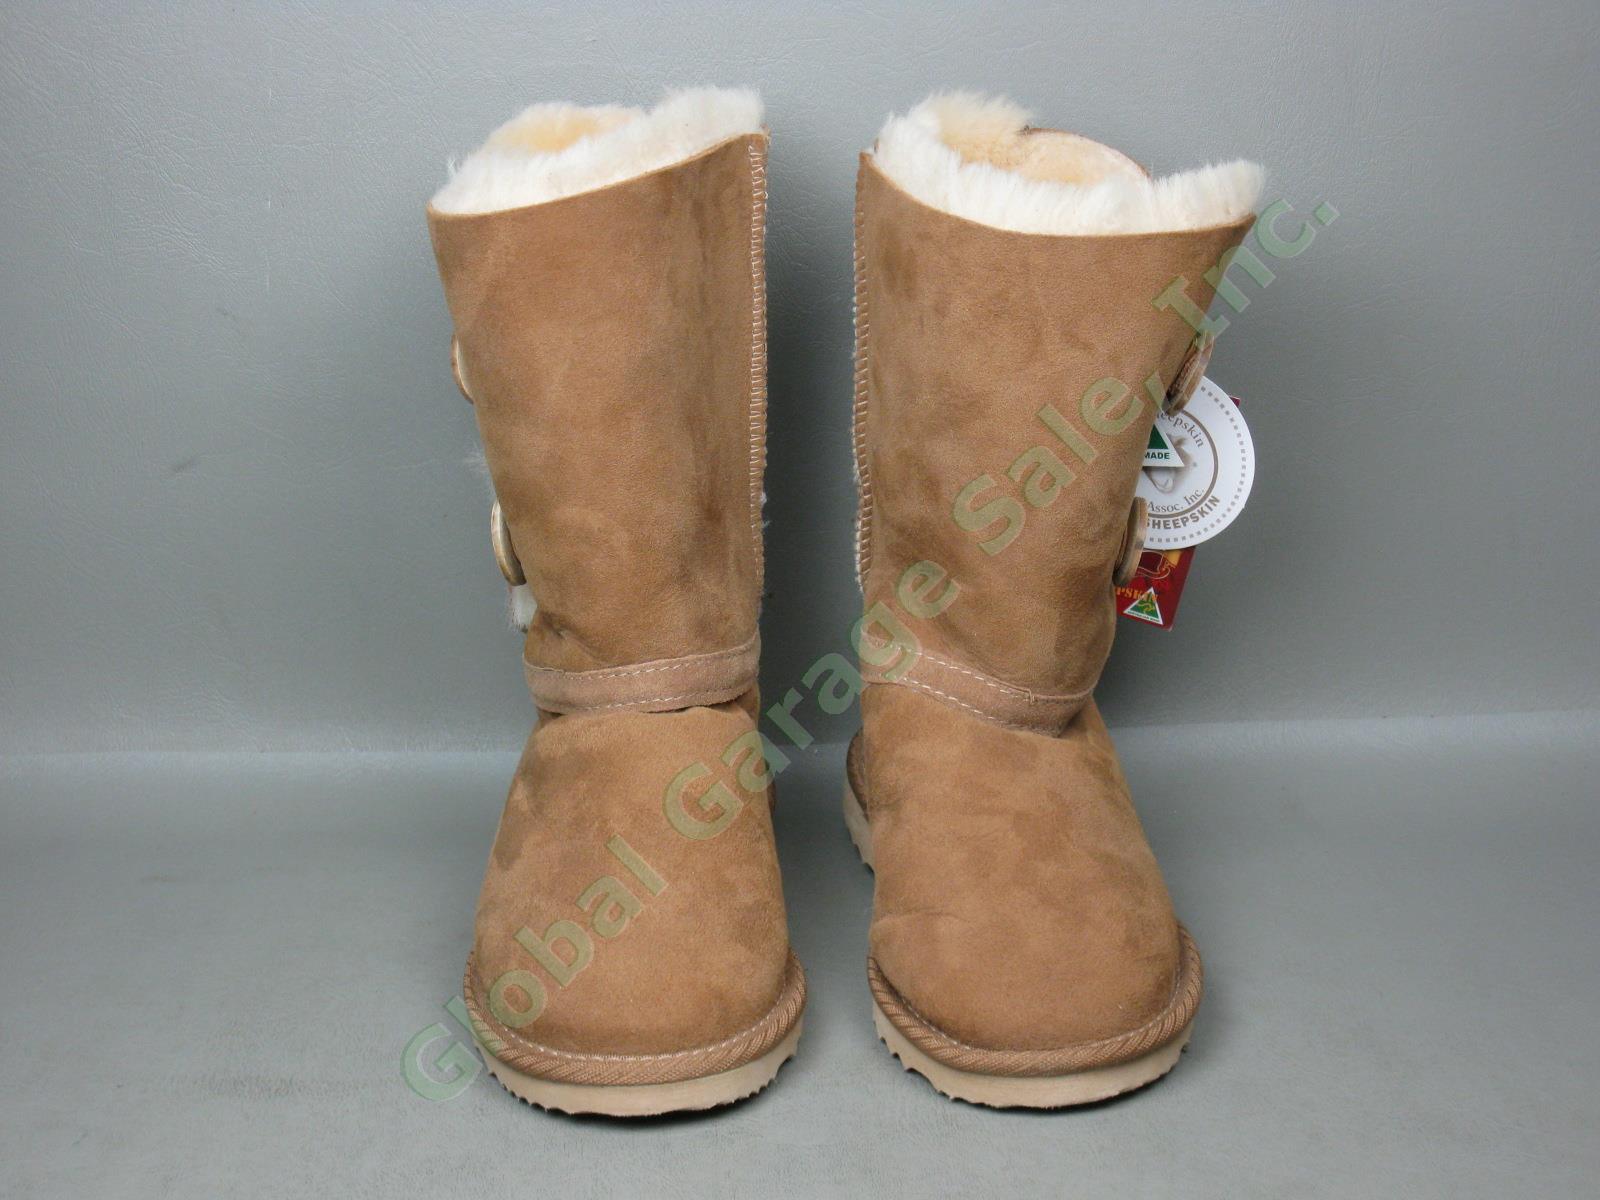 NWT Ladies Womens UGG Sheepskin Tall Button Boots w/Tags US 5-6 5.5 UK 3 EU 35.5 1